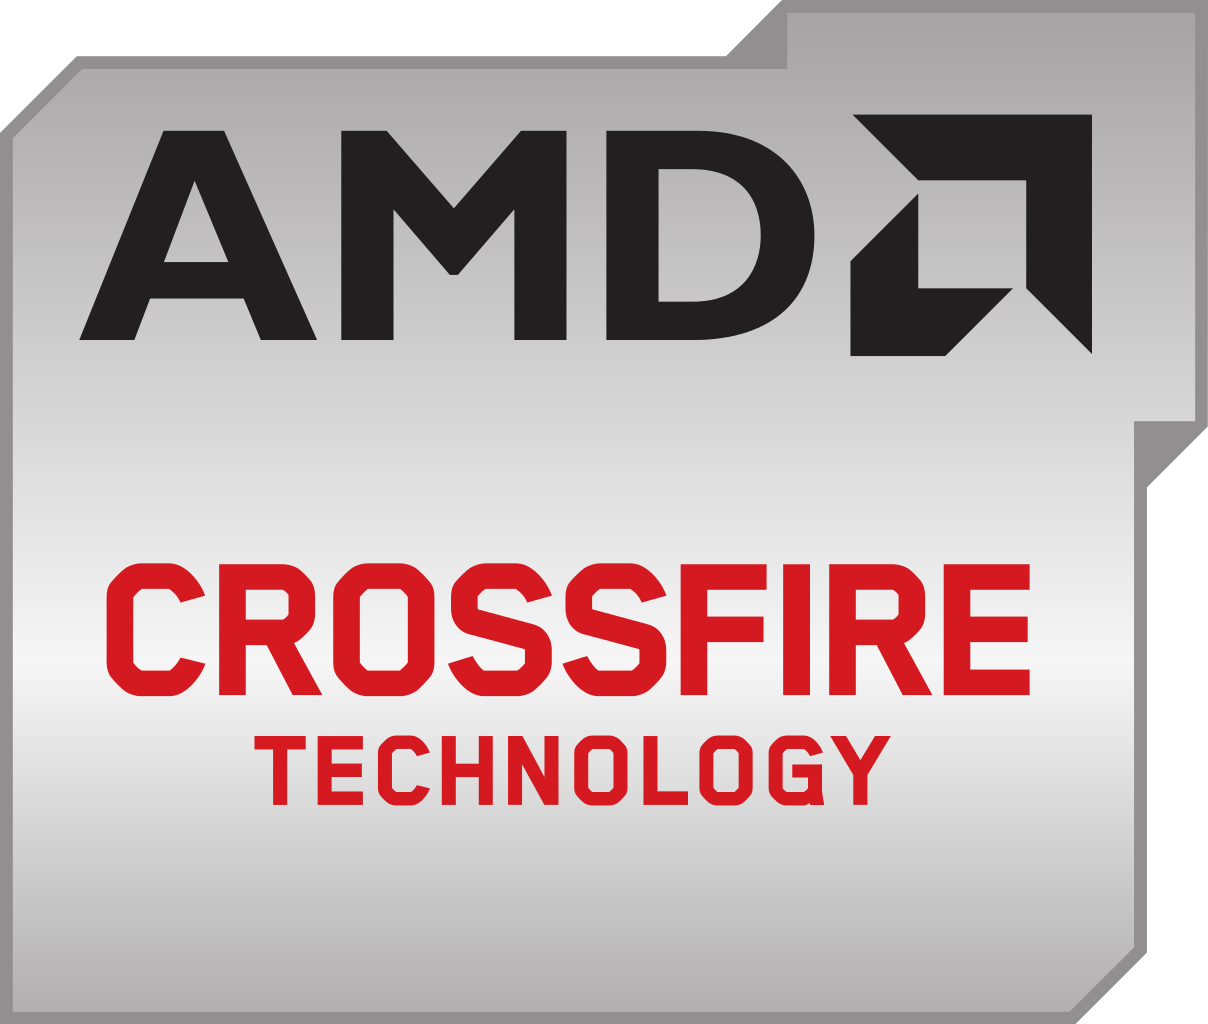 amd_crossfire_technology_logo